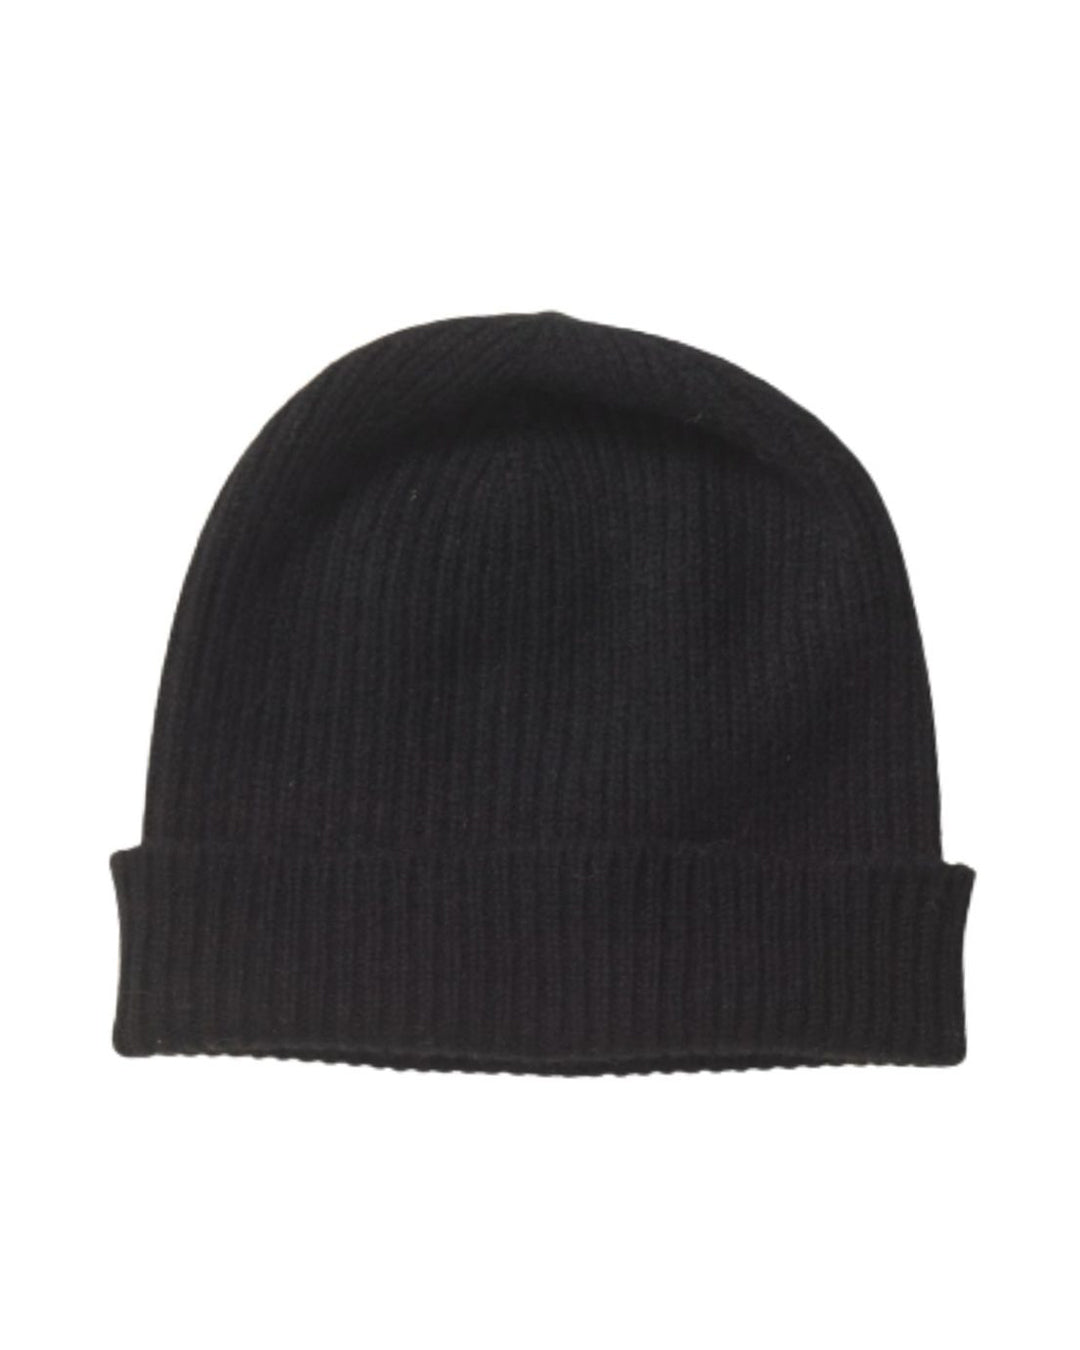 Unisex Rib Knit Cashmere Beanie Hat